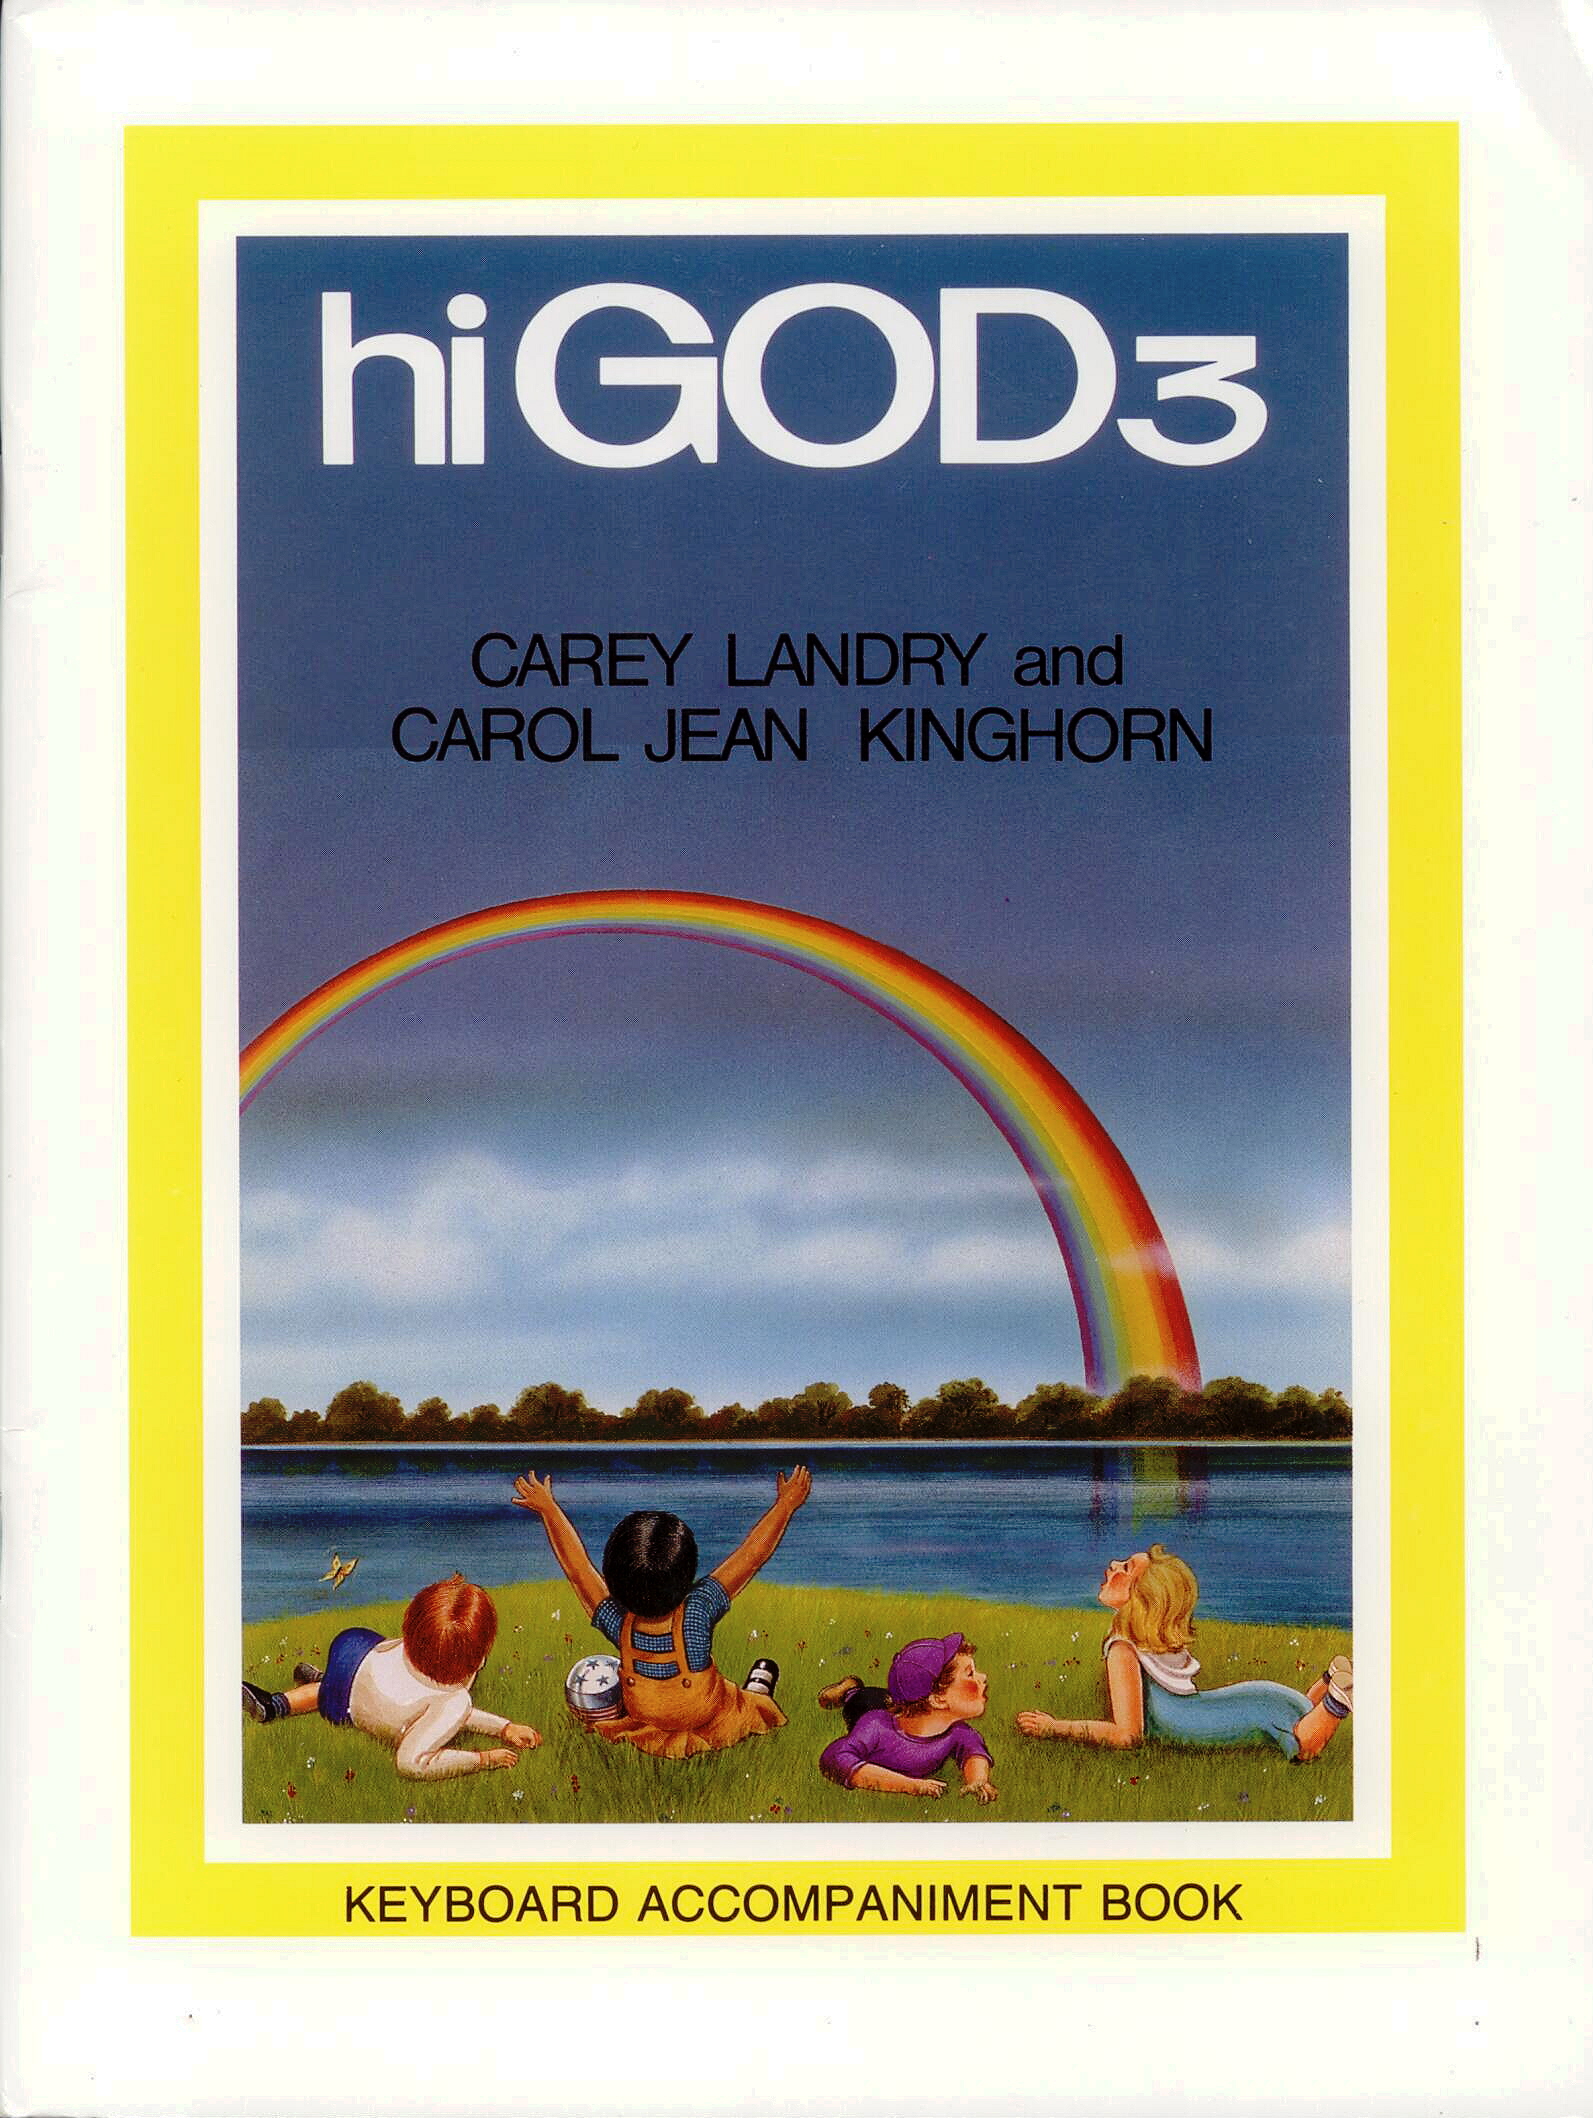 Hi God 3 Accompaniment Book C. Landry C. Kinghorn